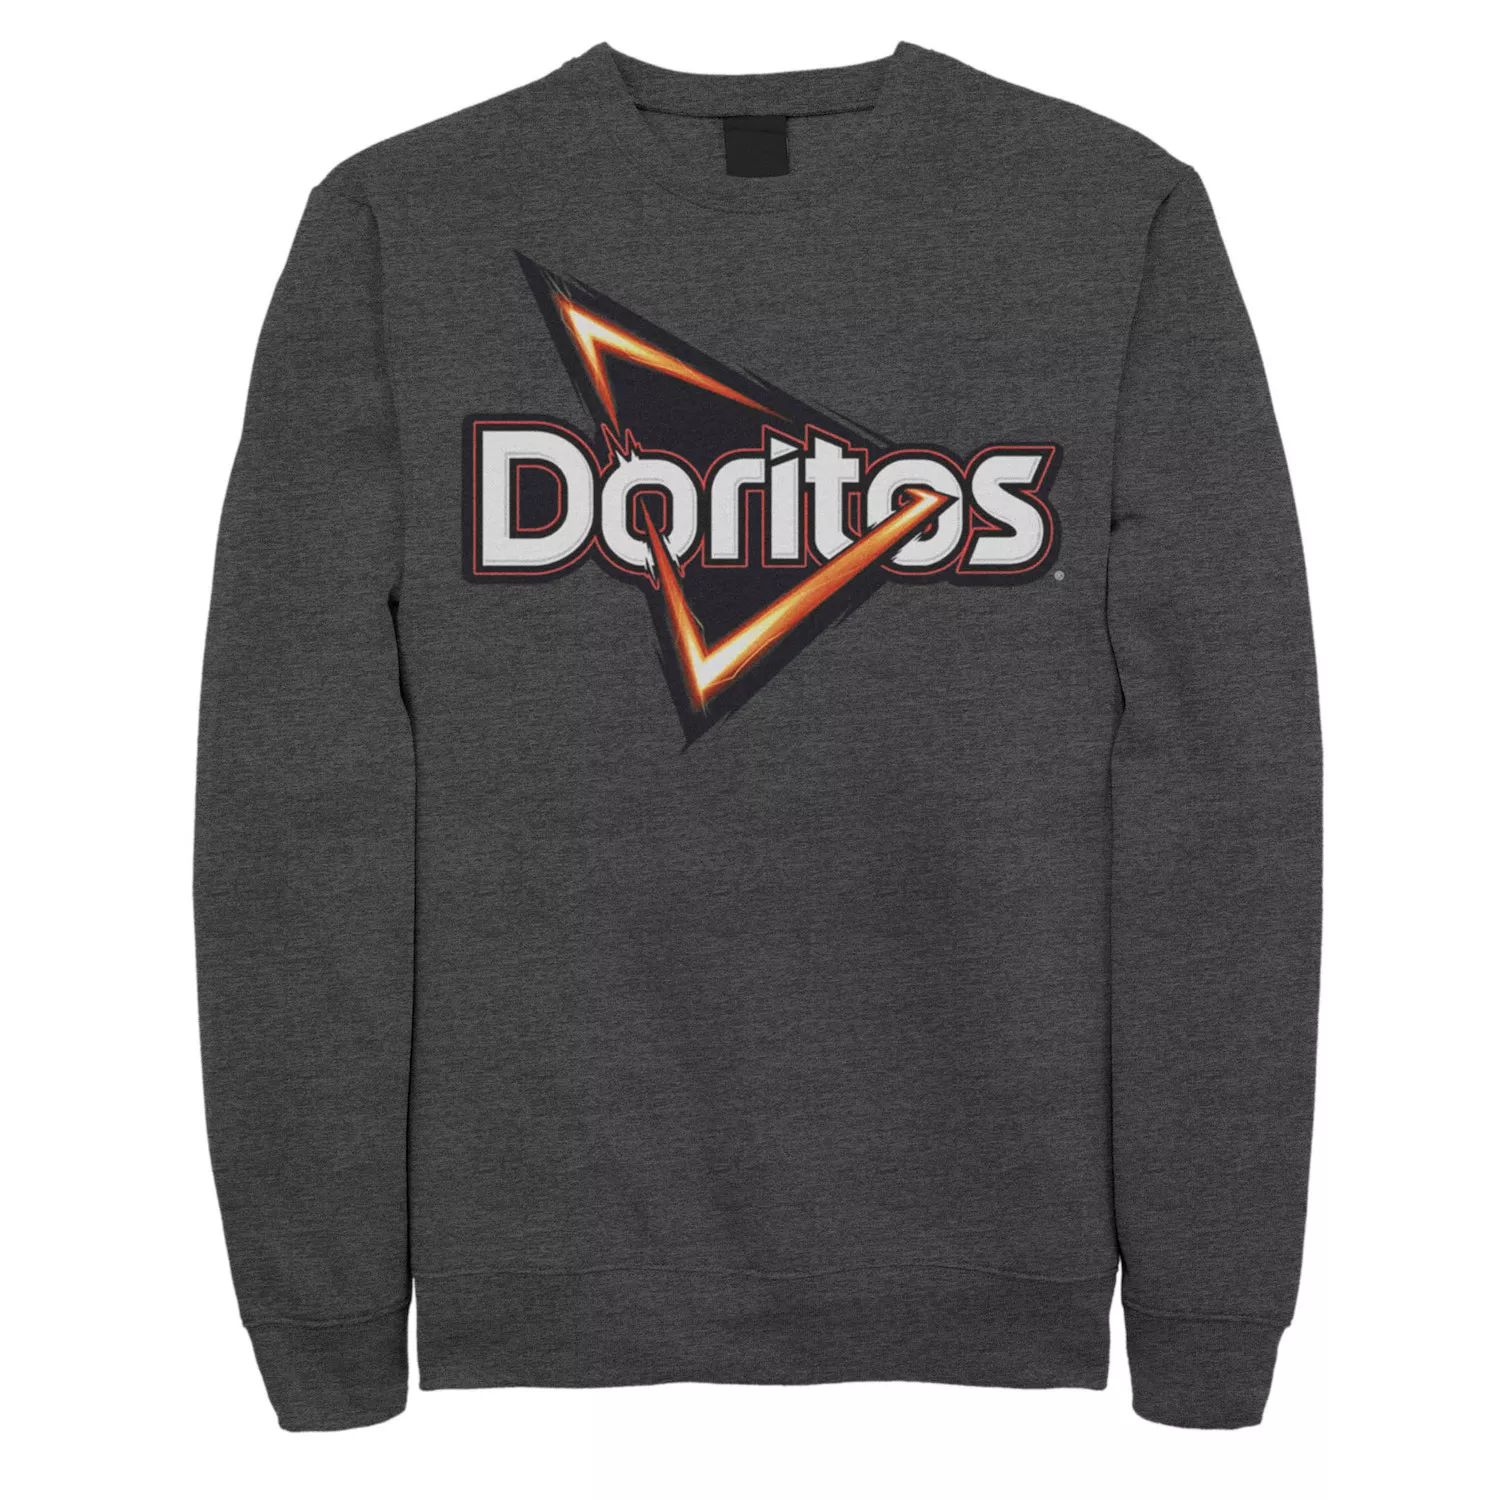 Мужская толстовка с классическим логотипом Doritos Triangle Chips Licensed Character мужская футболка с логотипом doritos tortilla chips licensed character